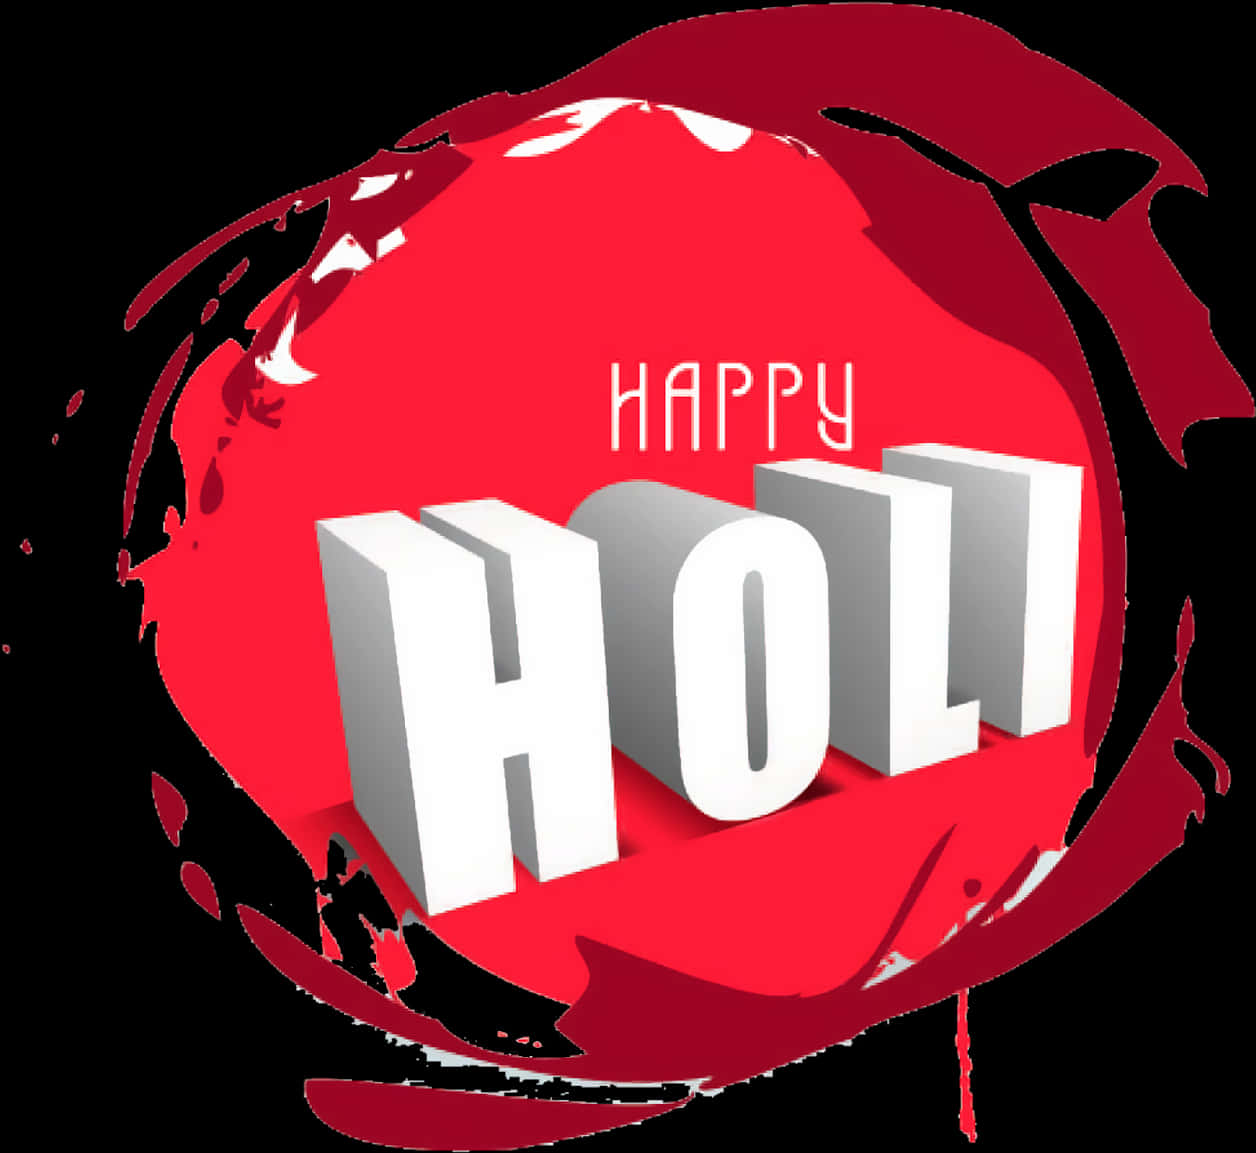 Happy Holi3 D Text Celebration PNG